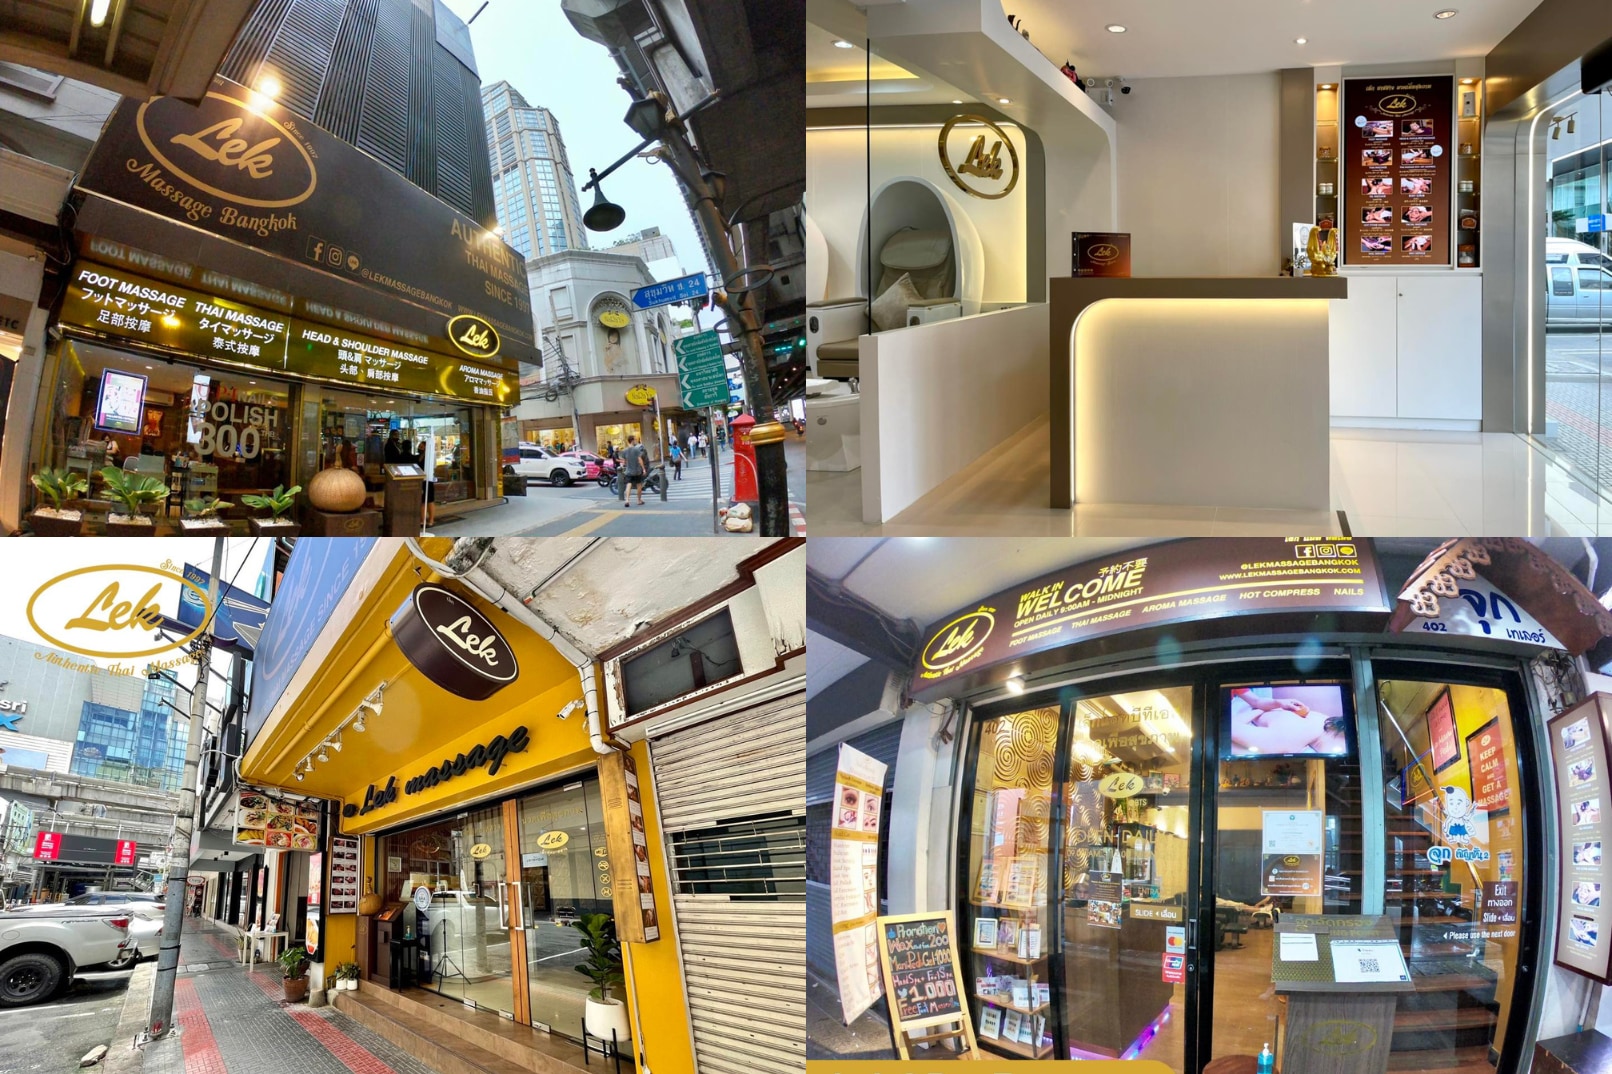 Lek Massage 成立於 1997 年，已在曼谷多個黃金地段開設了 16 家分店